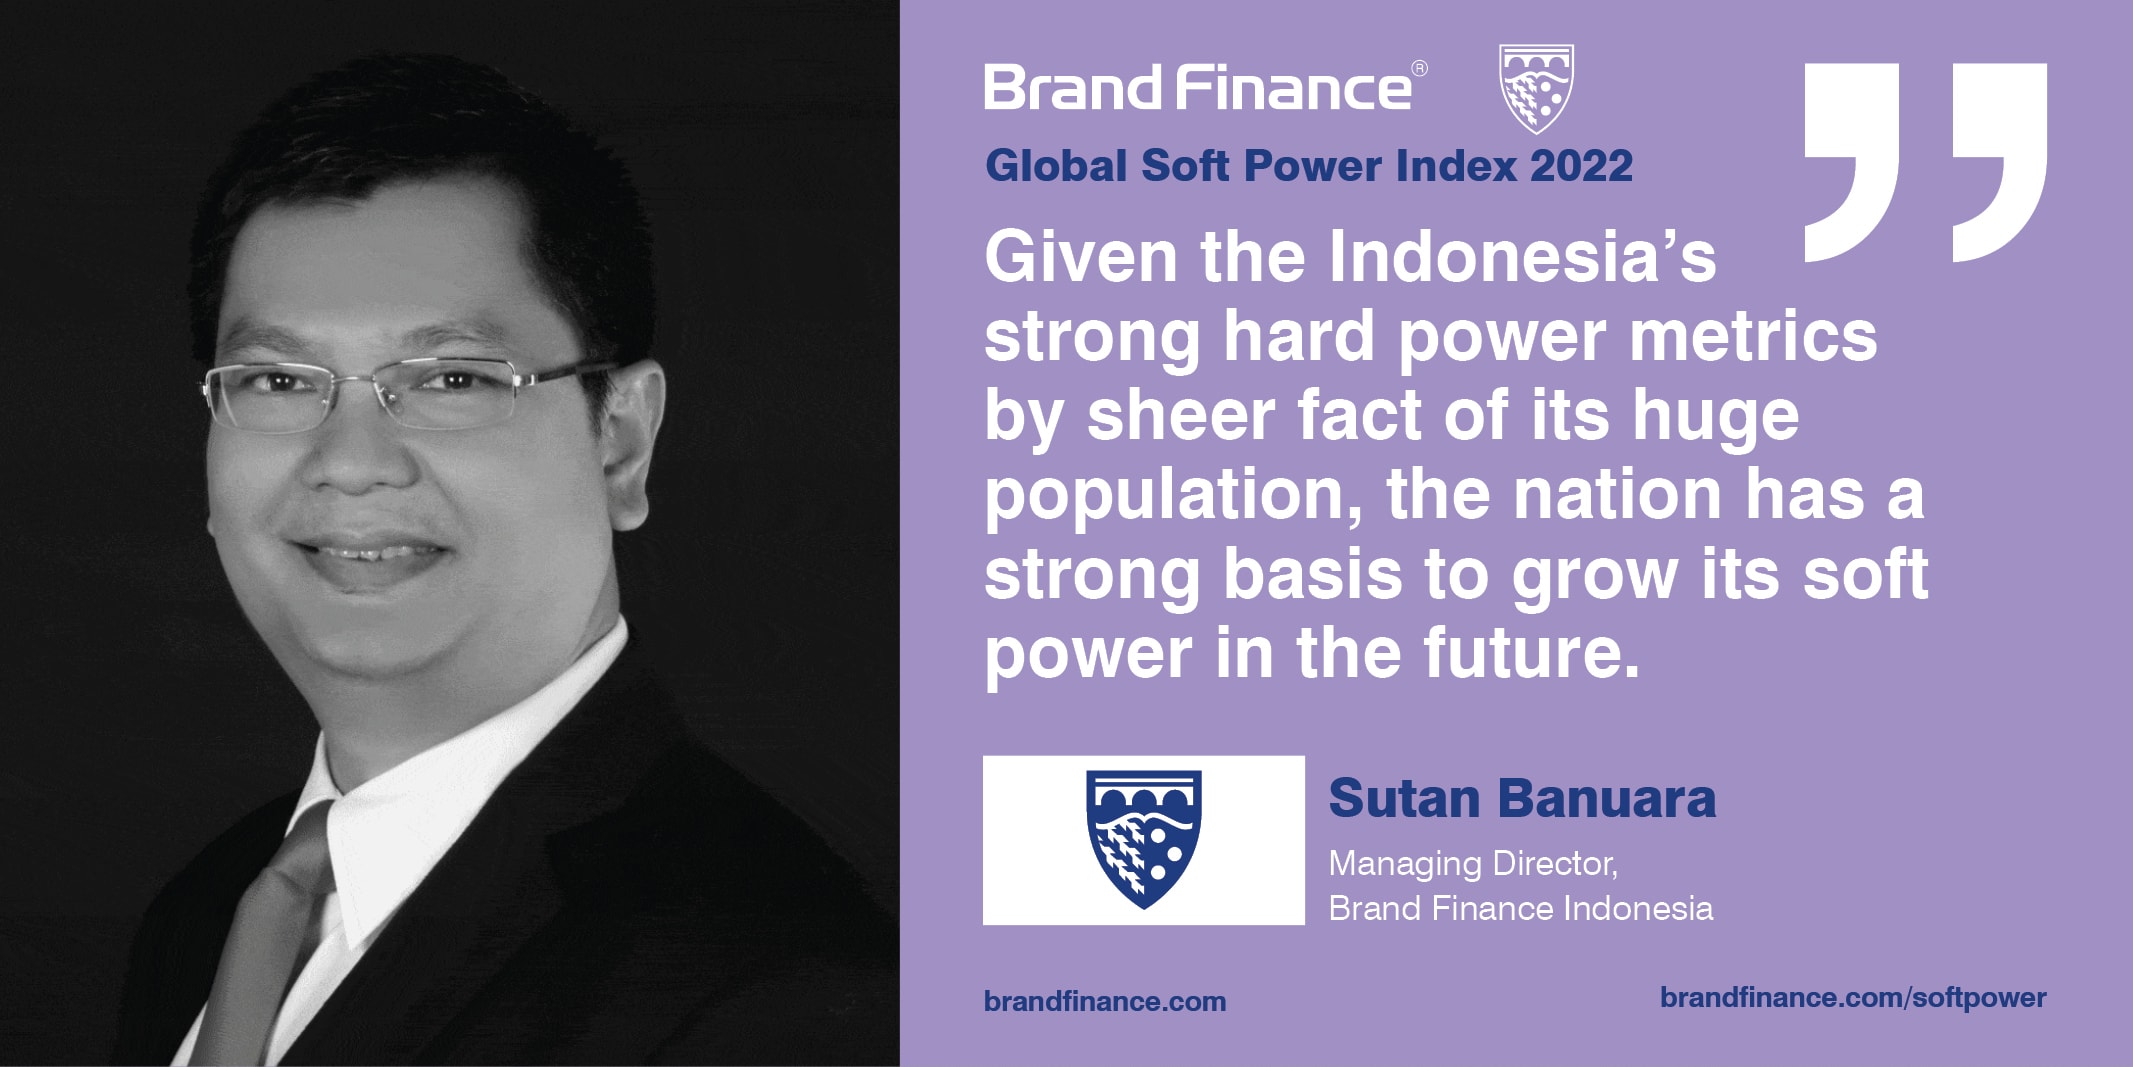 Sutan Banuara, Managing Director, Brand Finance Indonesia